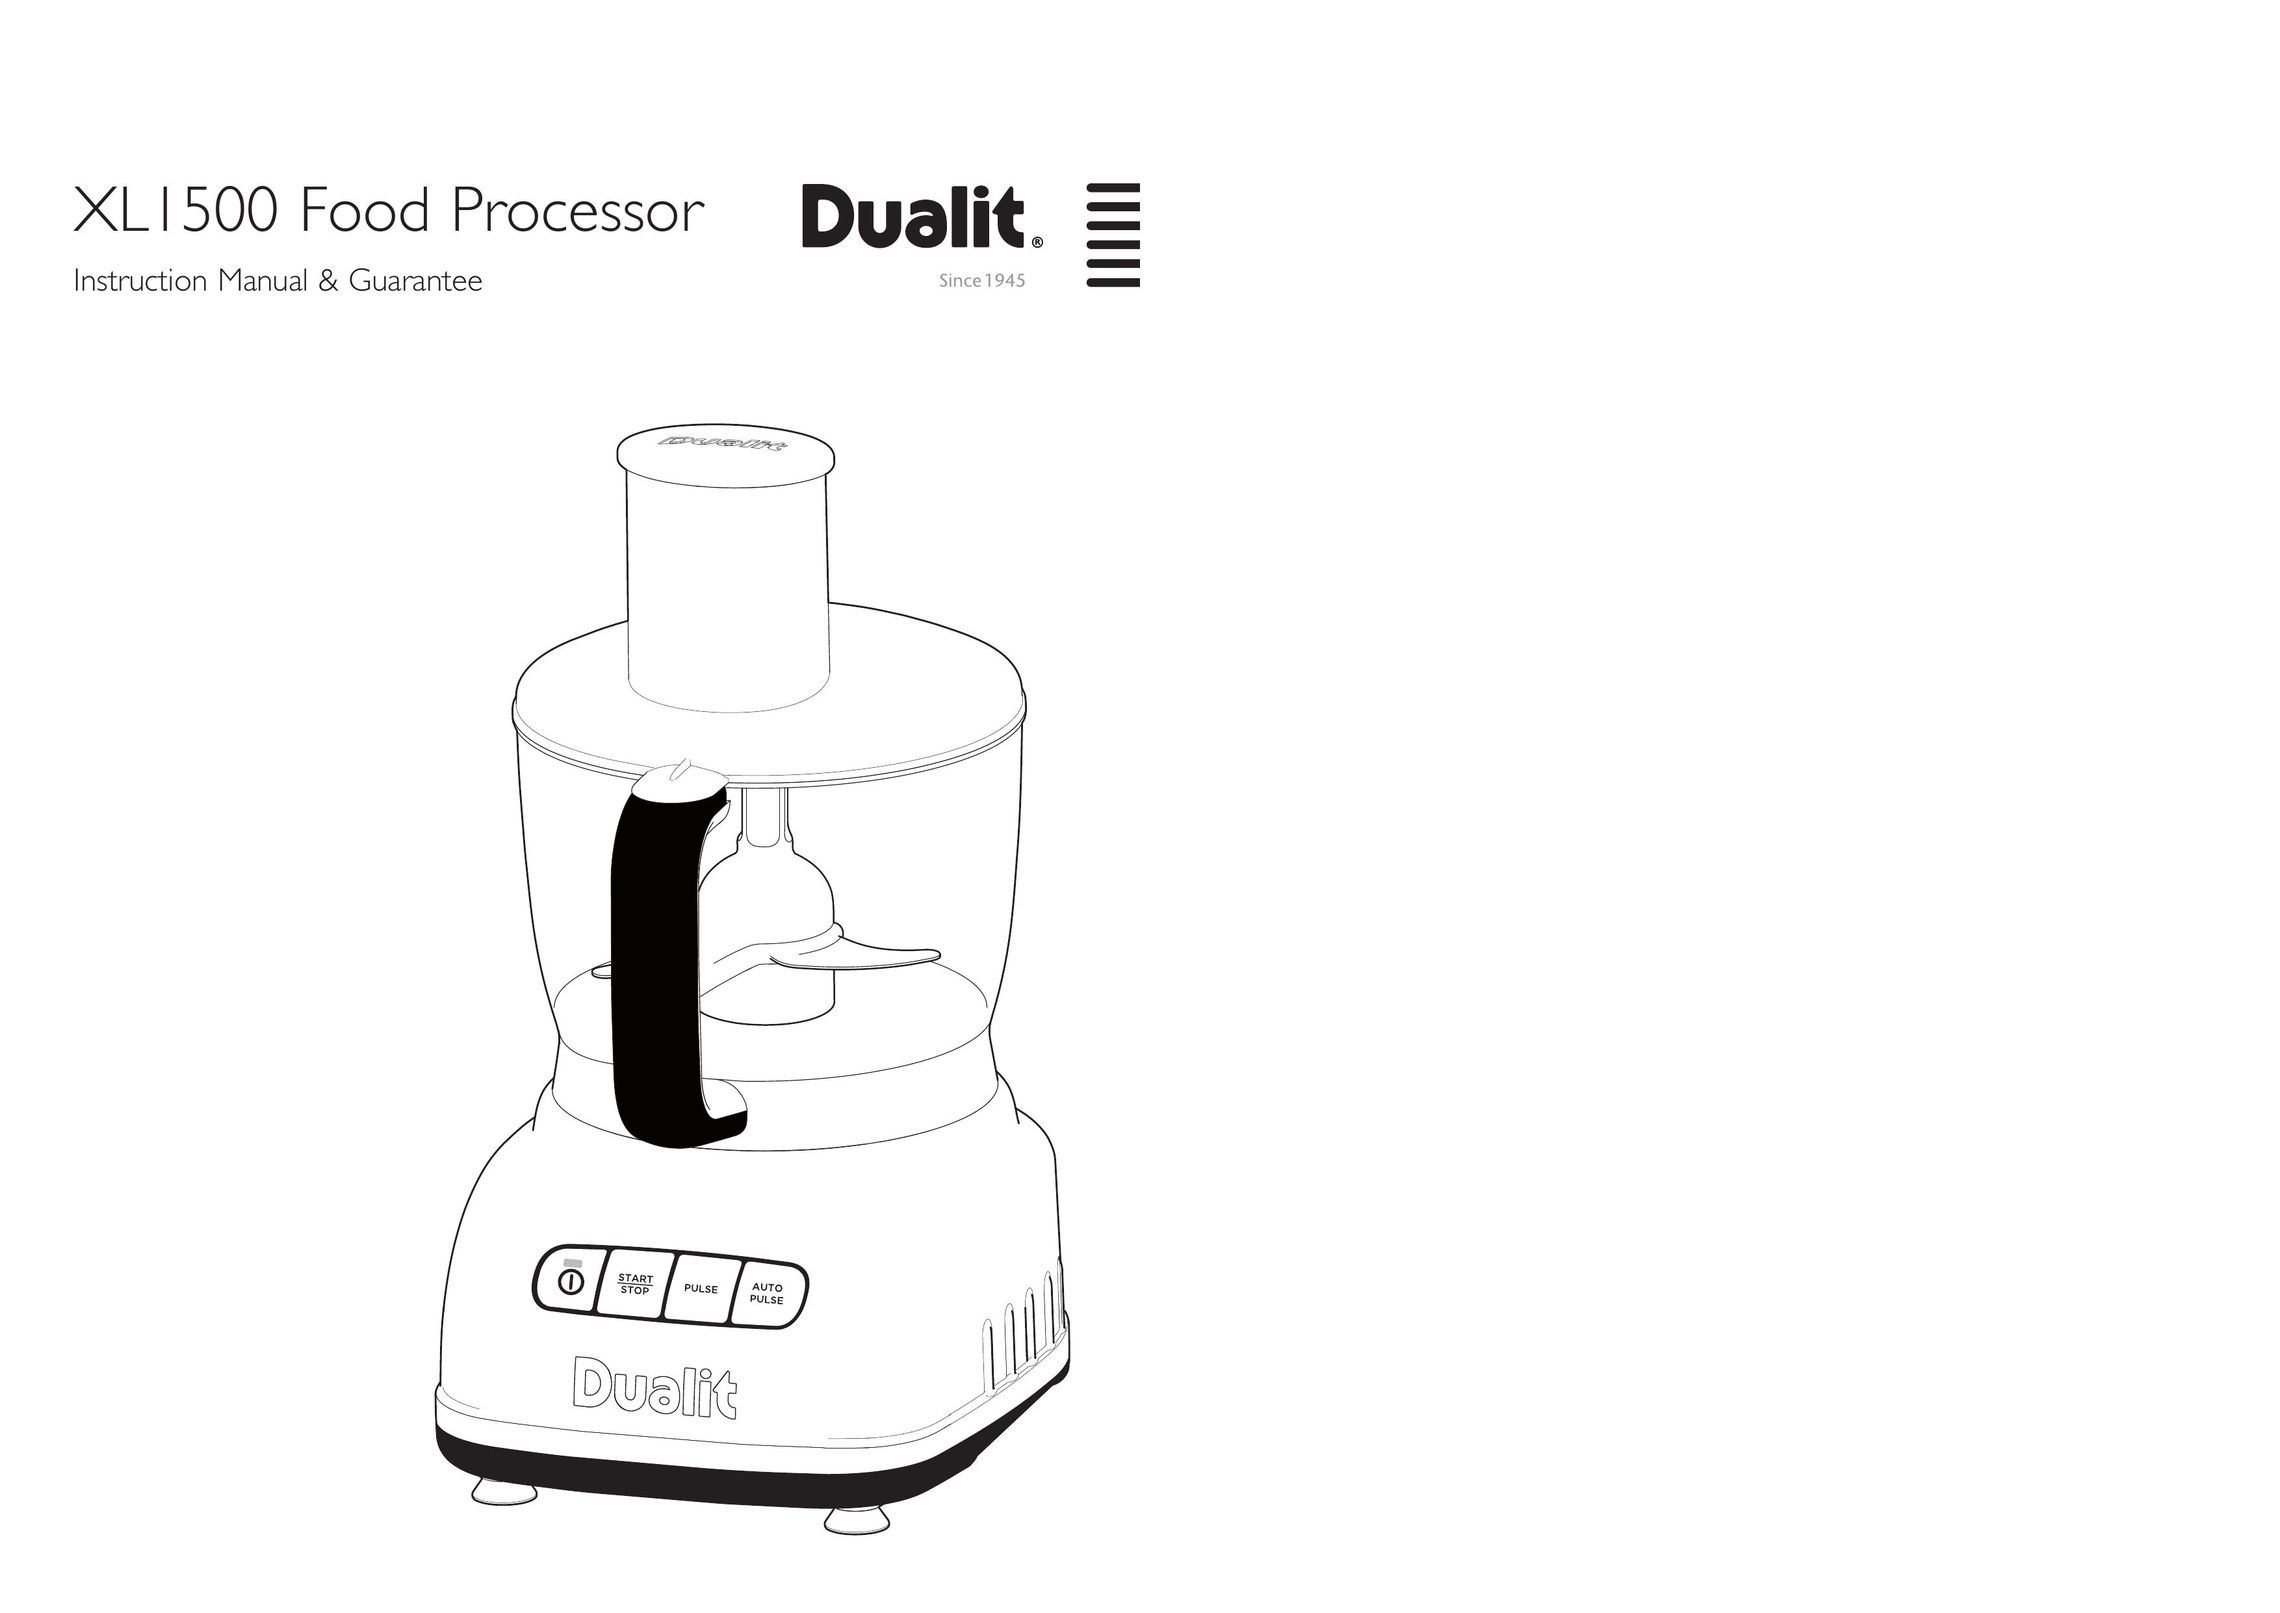 Dualit XL1500 Food Processor User Manual